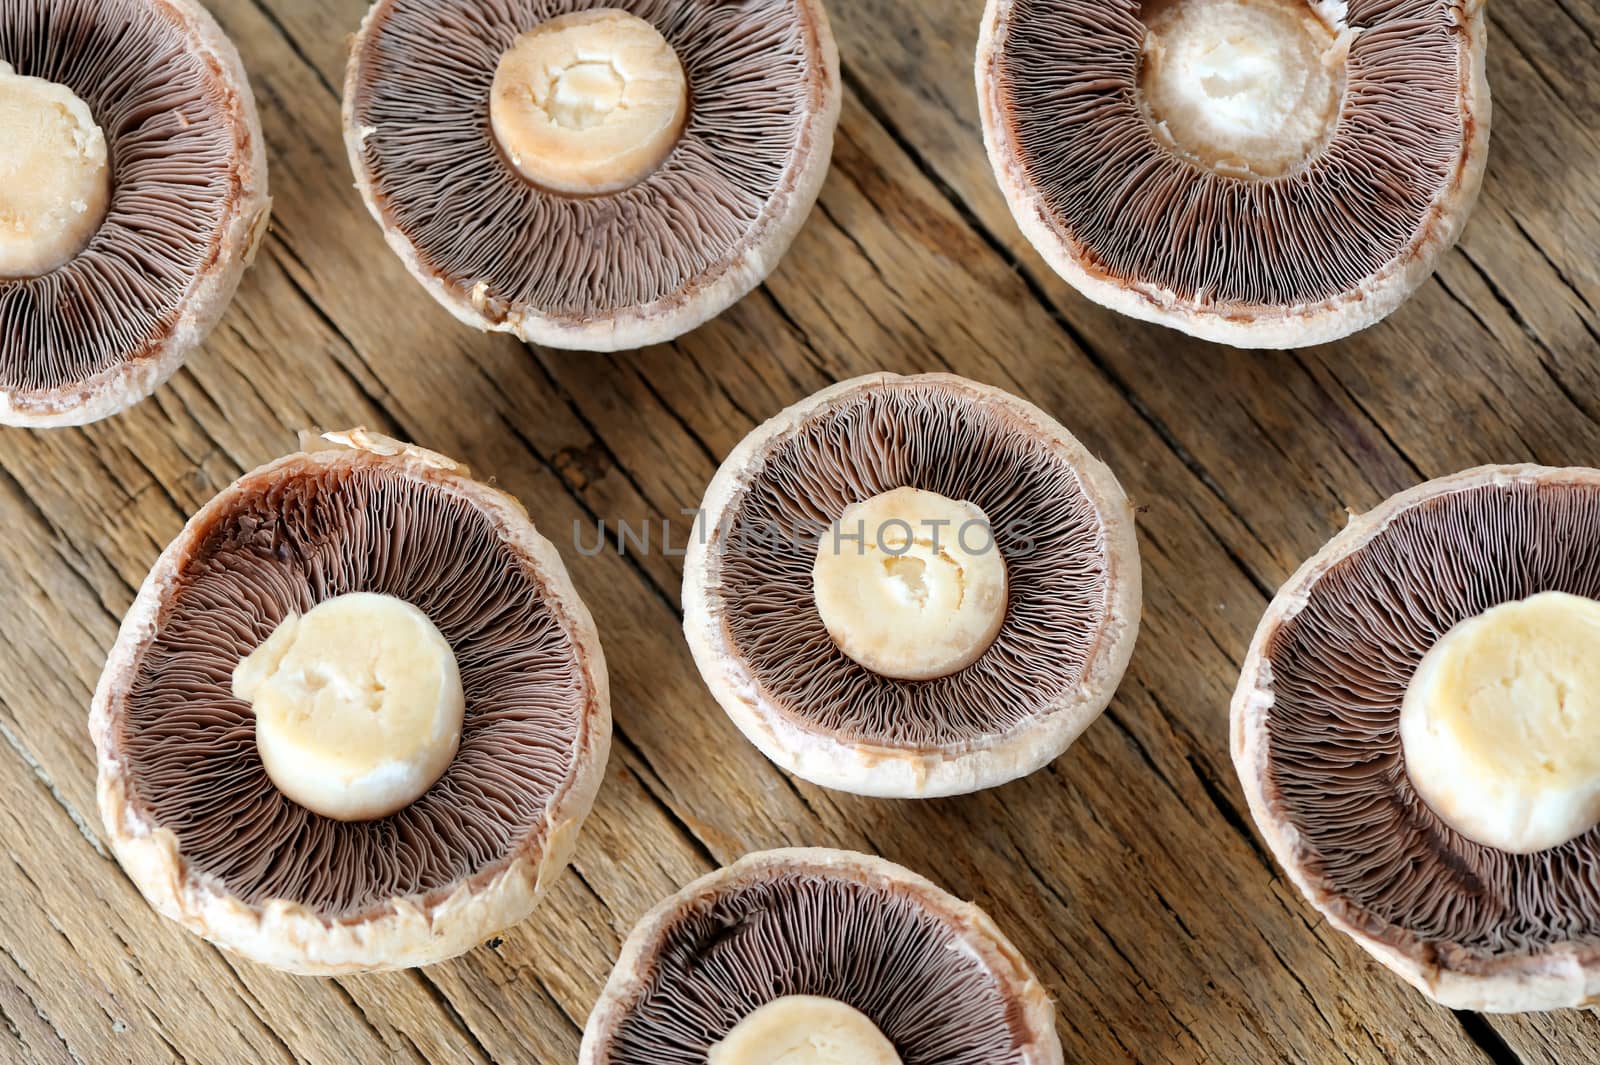 Sliced mushrooms on old wooden table